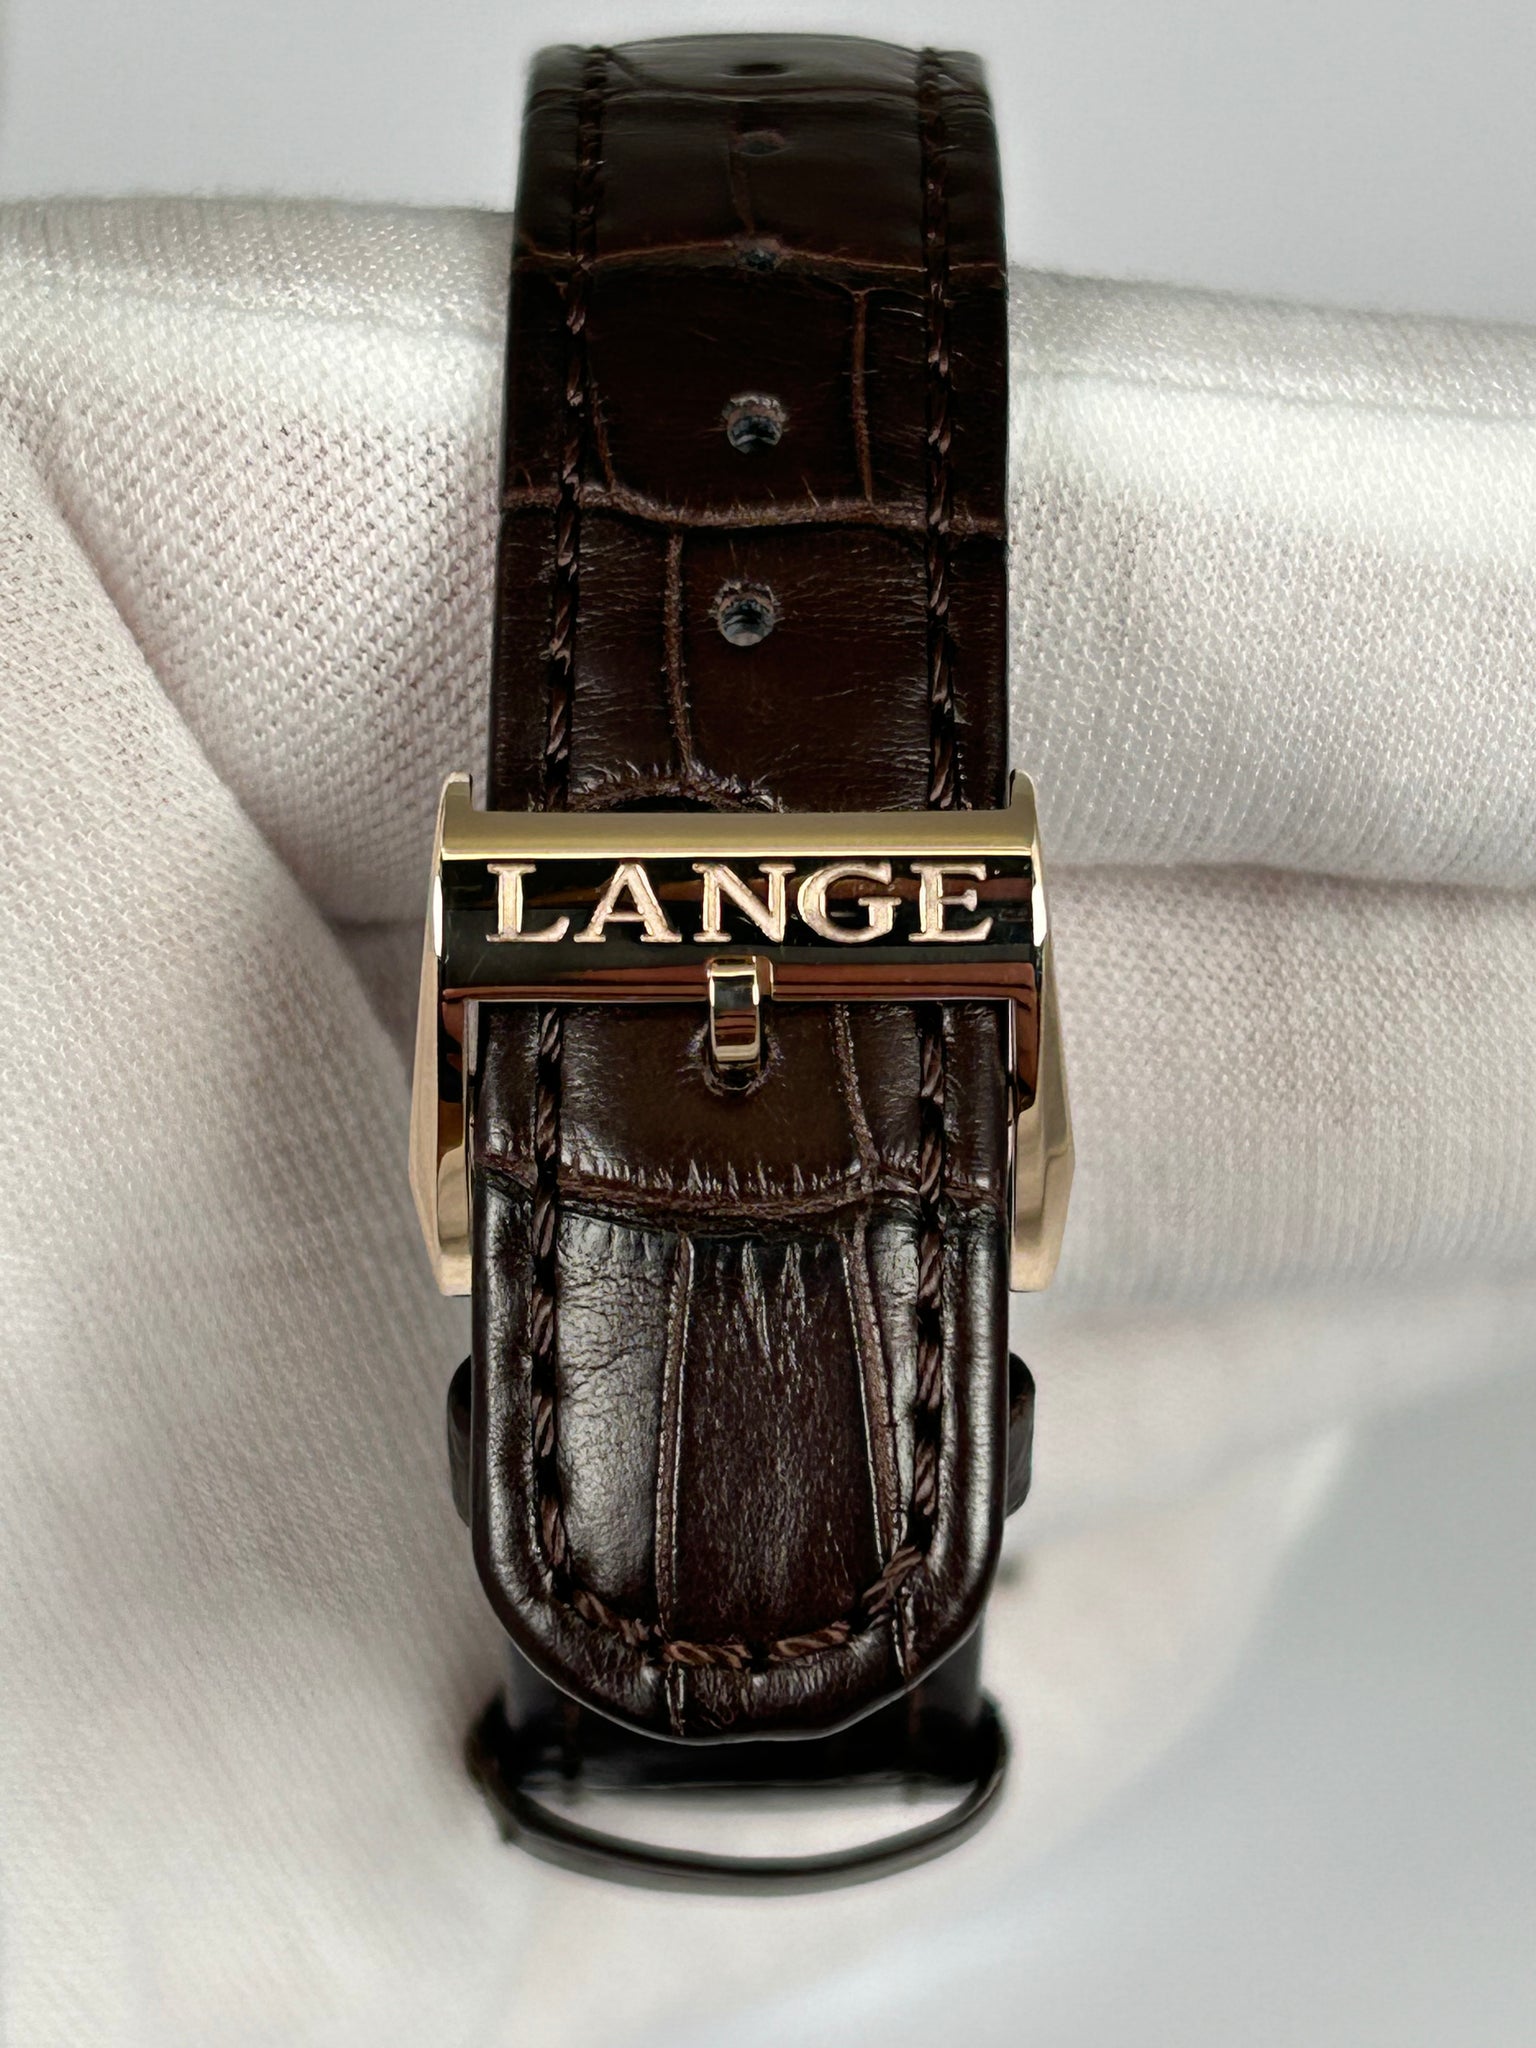 A. Lange & Söhne limited edition 1815 honeygold 239.050